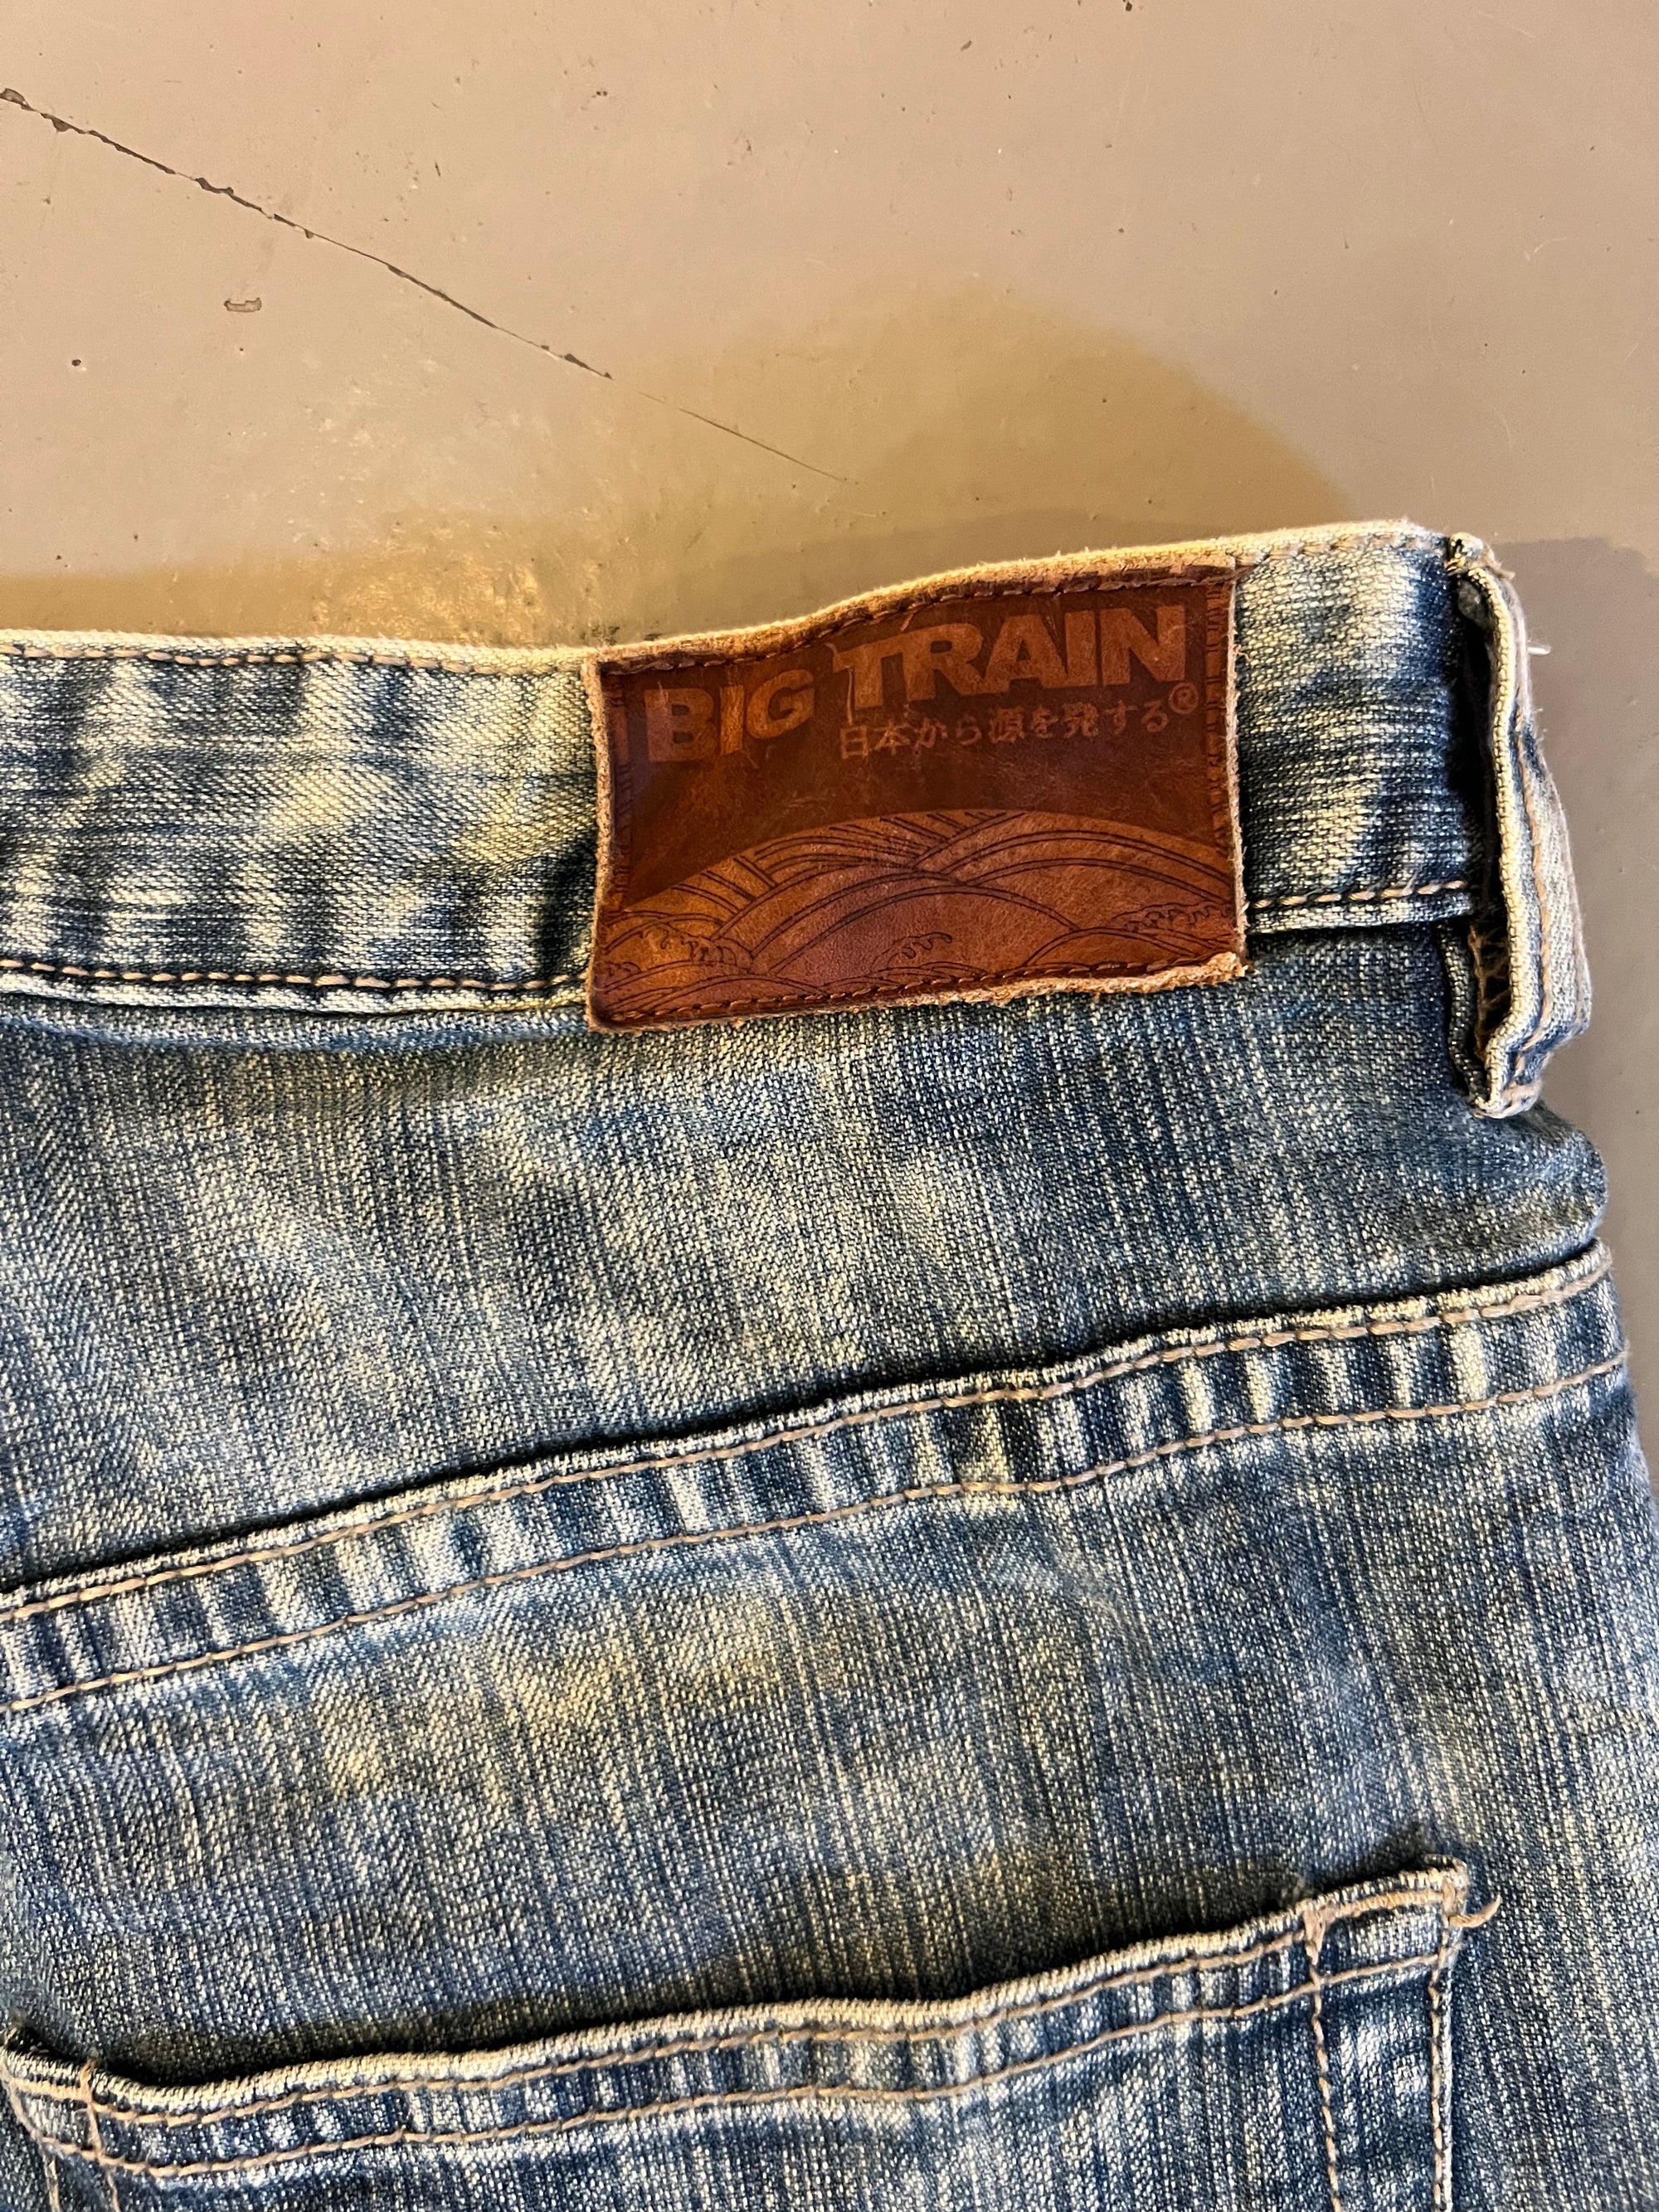 Vintage Big Train Denim Pants M/L